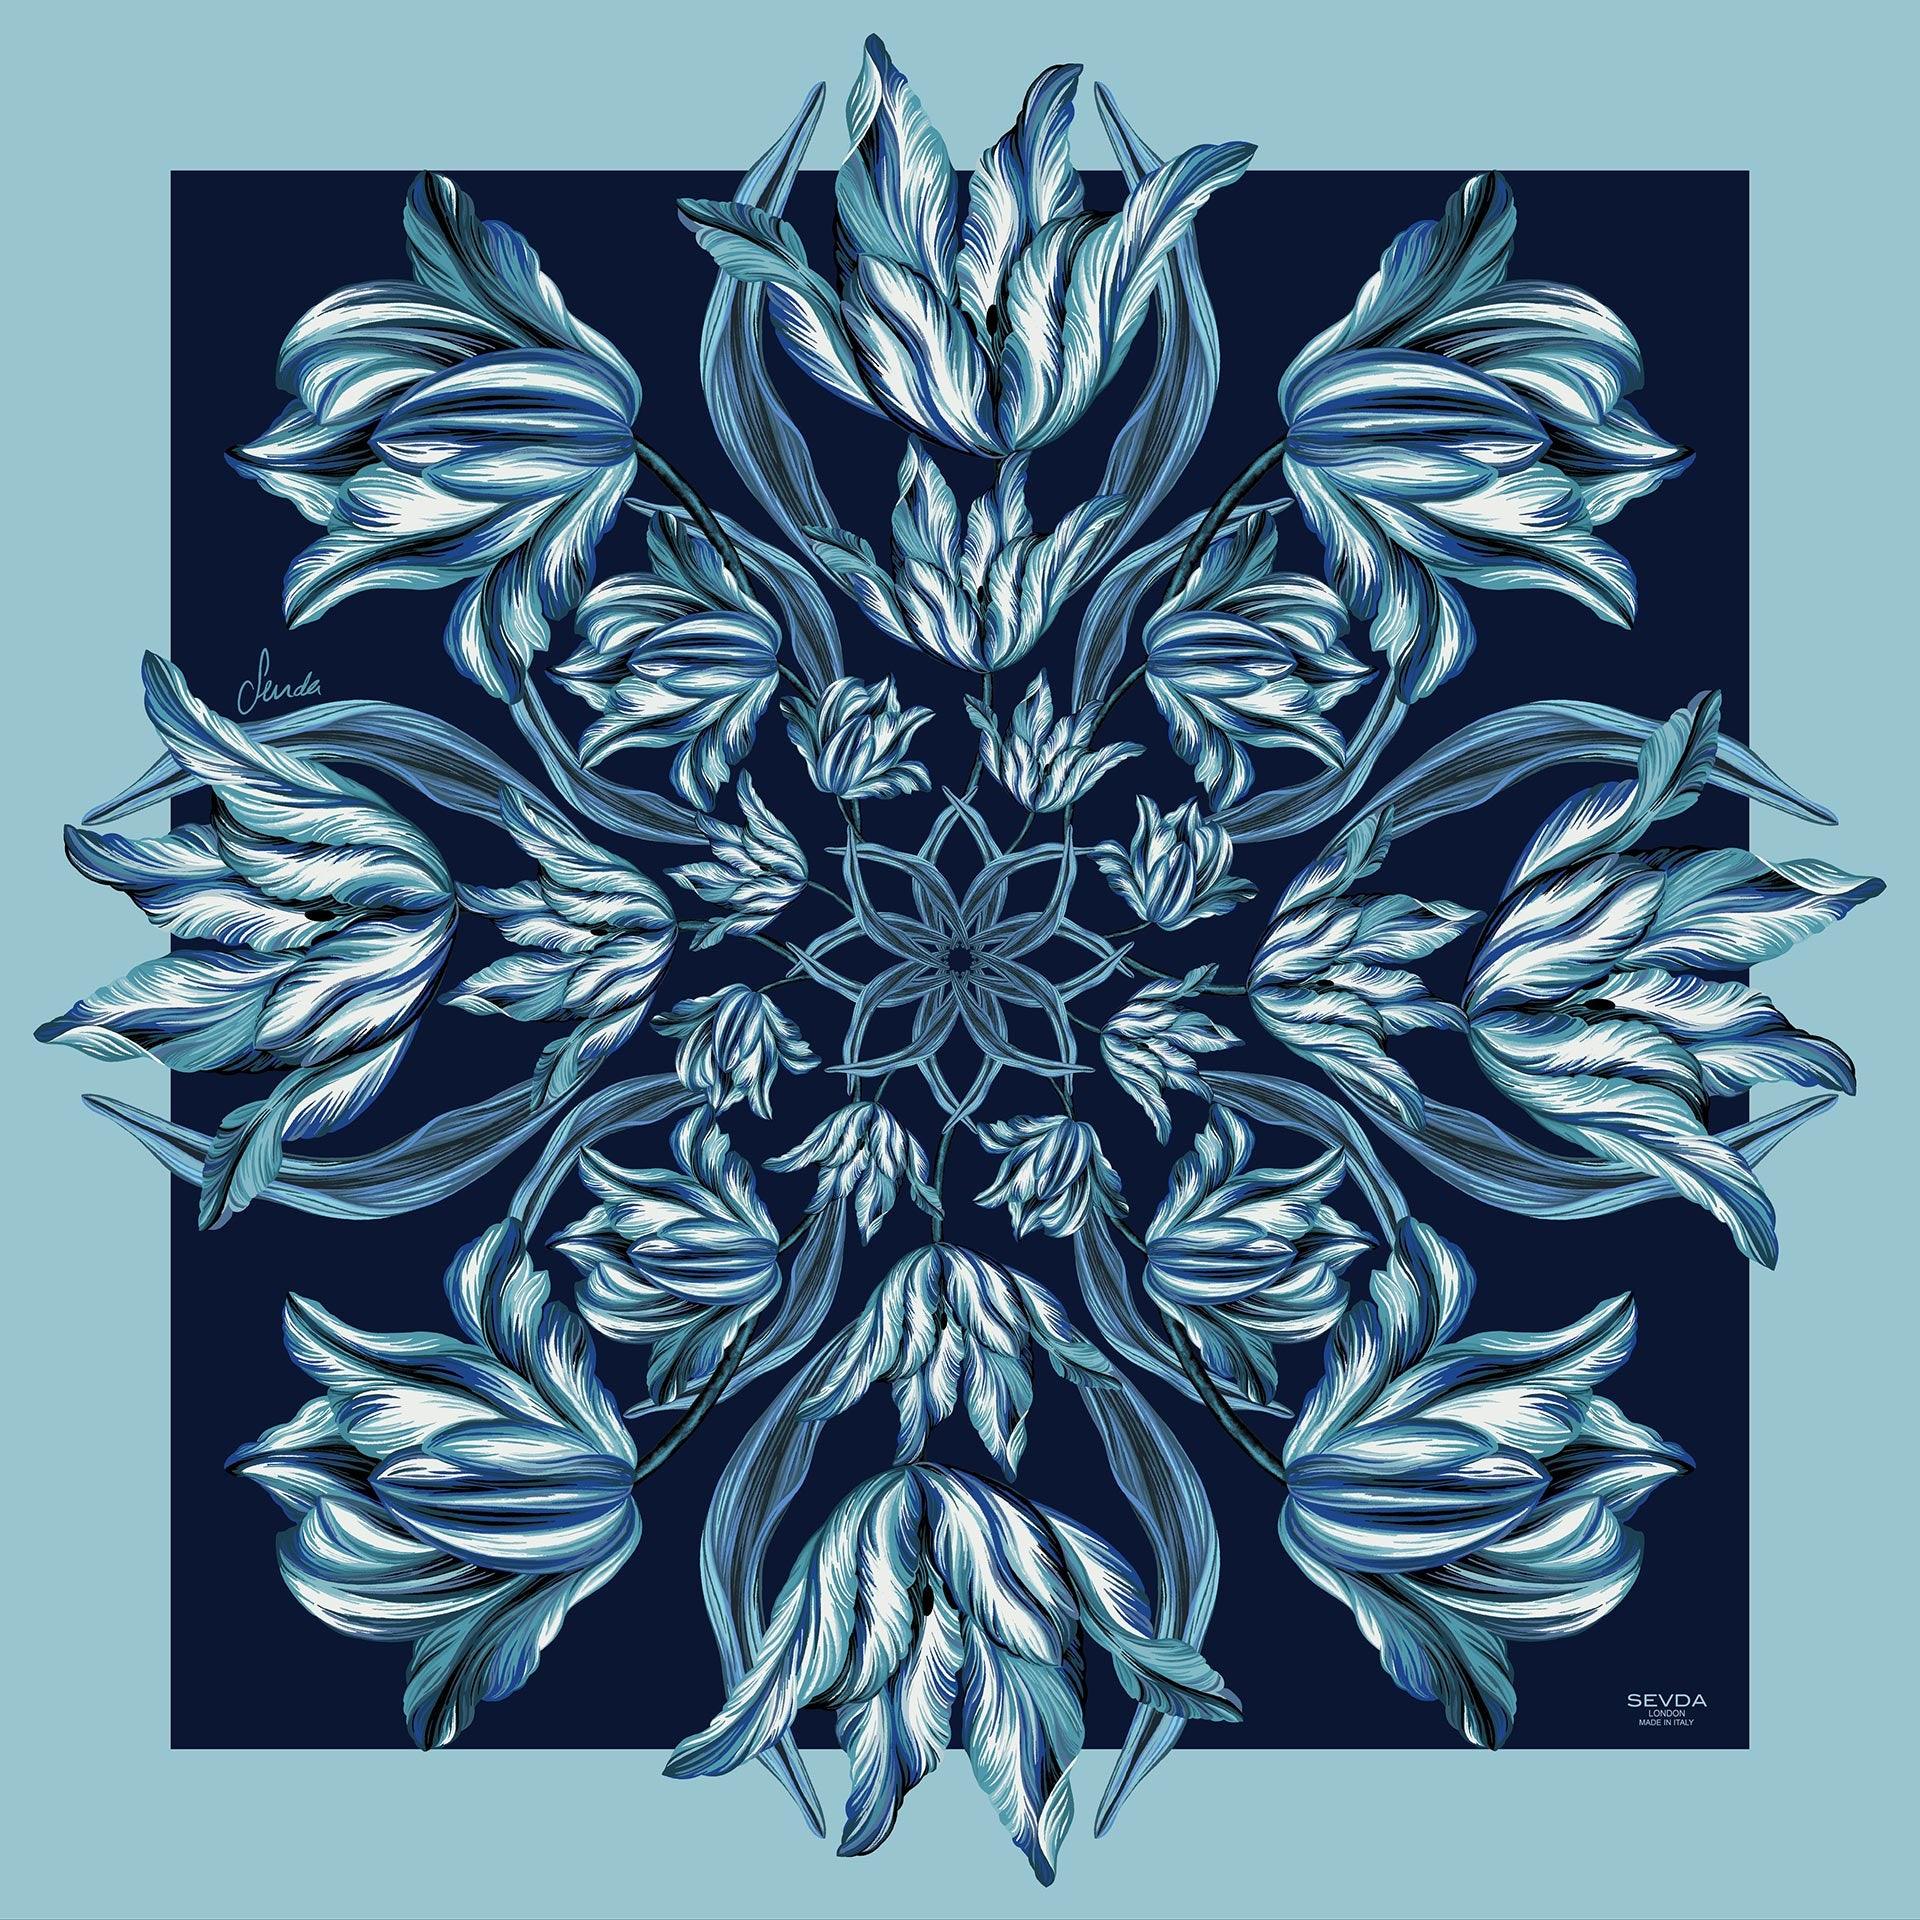 Blue British Tulip Garden Silk Scarf - Fusion of London's design and Italian craftsmanship, an exquisite gift choice.